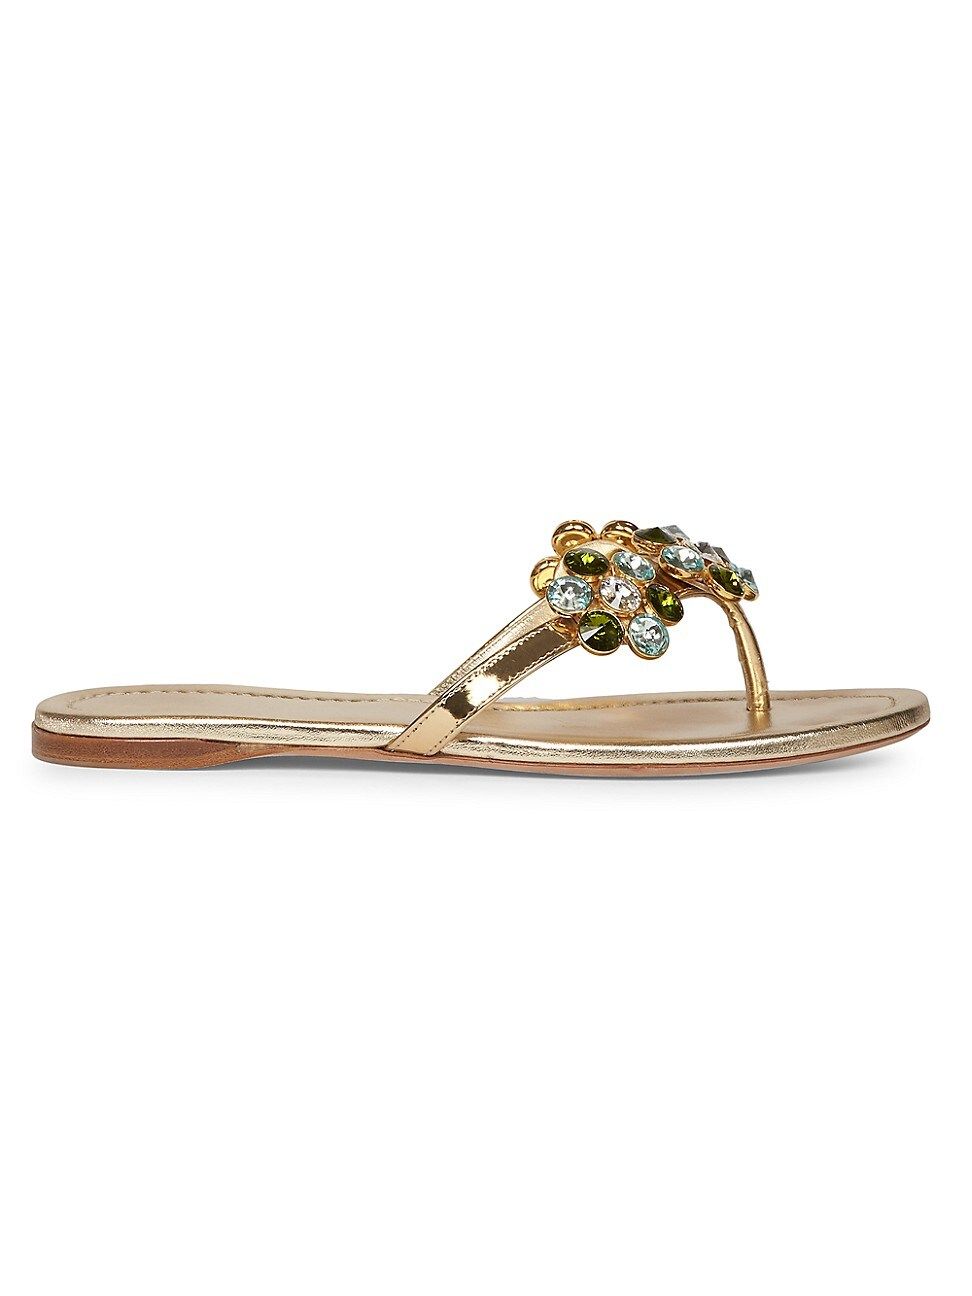 Women's Metallic Leather & Jewel Sandals - Gold - Size 6 | Saks Fifth Avenue